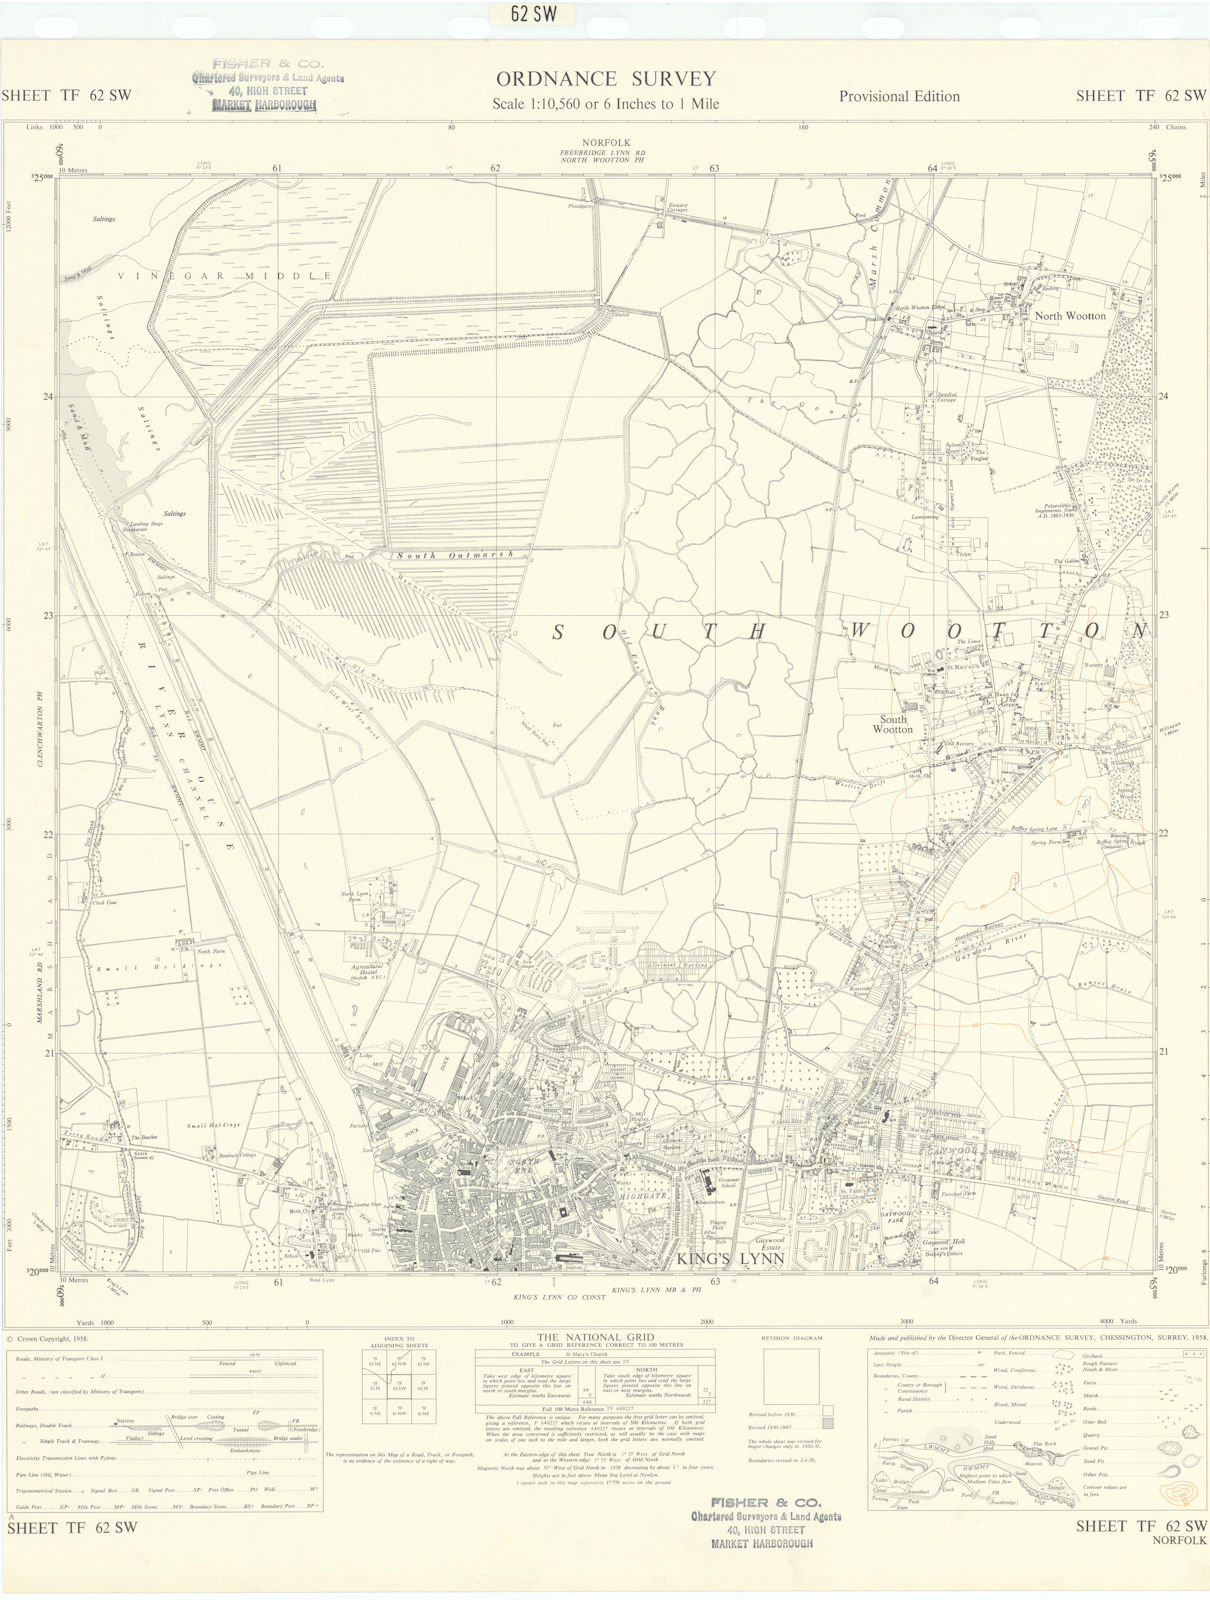 Ordnance Survey TF62SW Norfolk King's Lynn South Woottyon North Wooton 1958 map